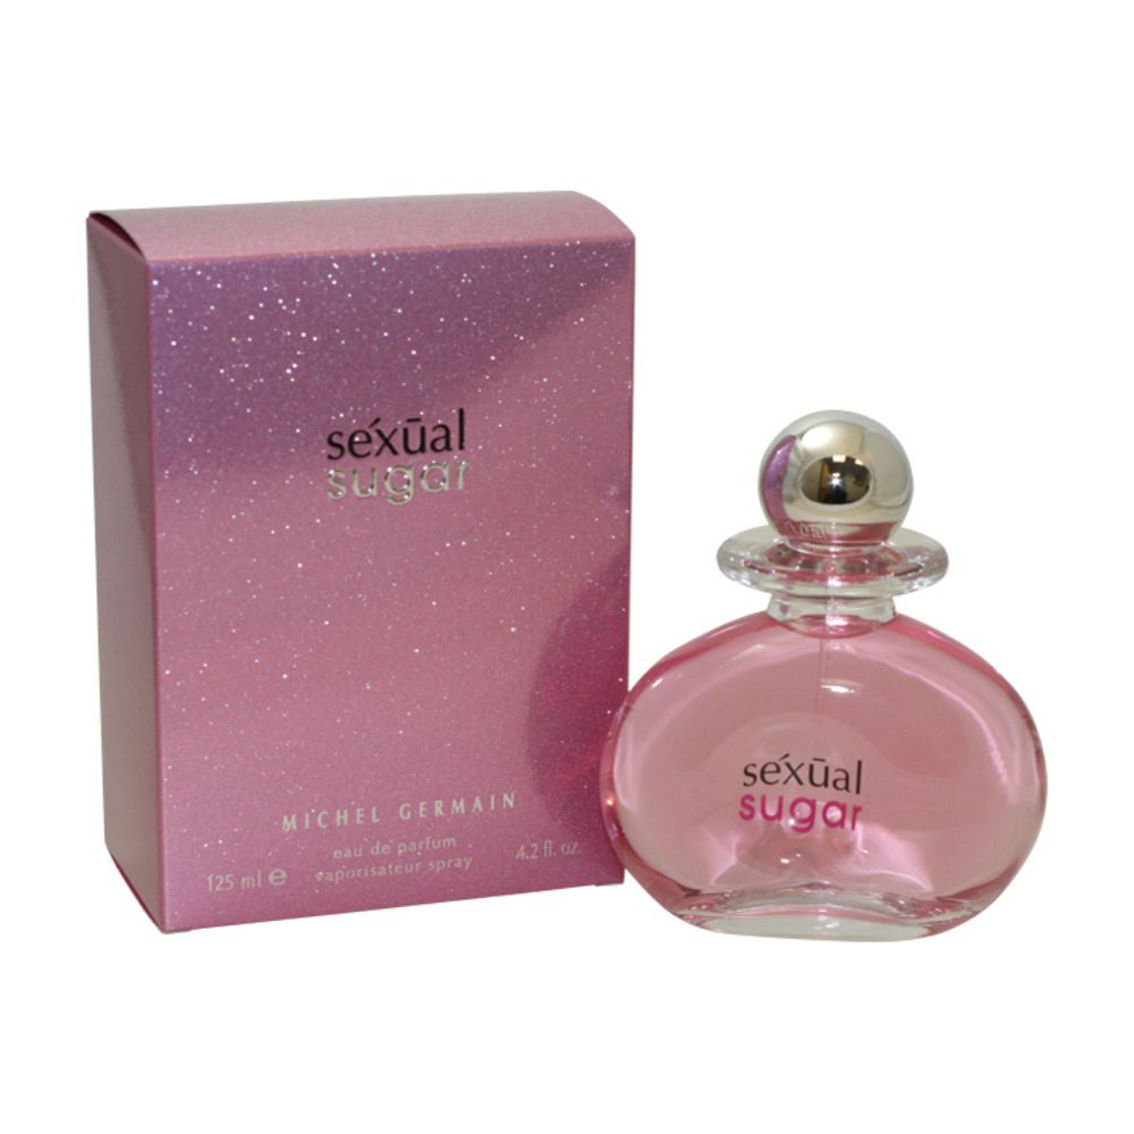 Michel Germain Sexual Sugar Eau De Parfum for Women - Image 2 of 2